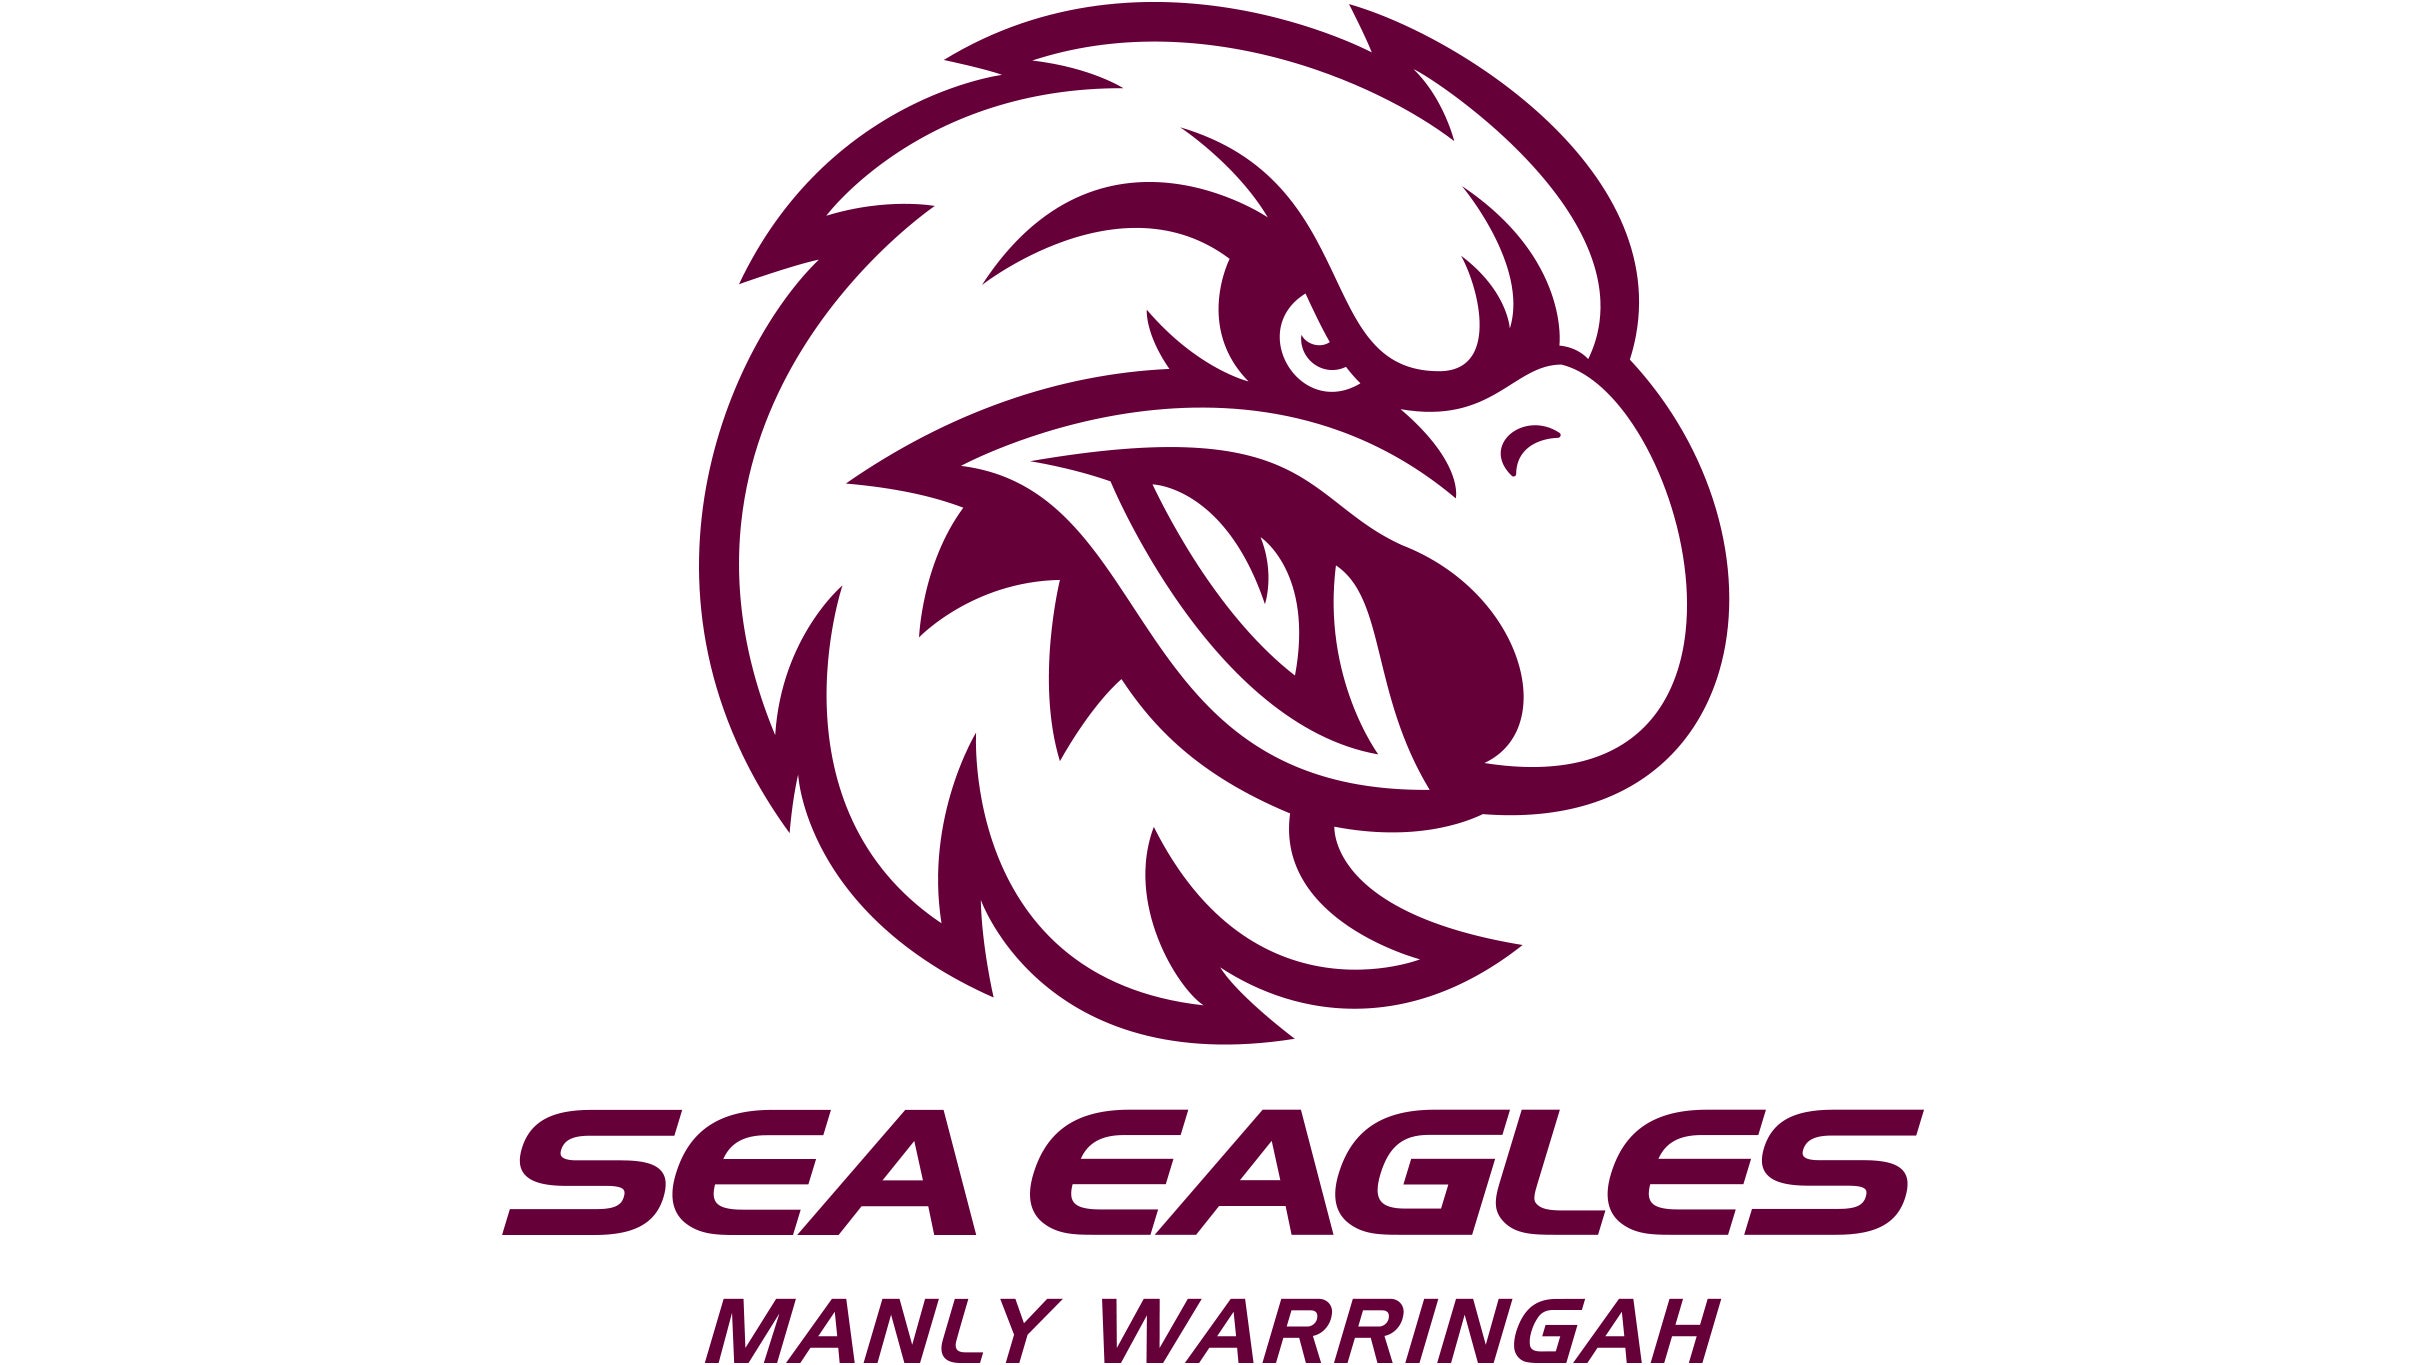 Manly Warringah Sea Eagles v Warriors in Brookvale promo photo for Sea Eagles Members presale offer code